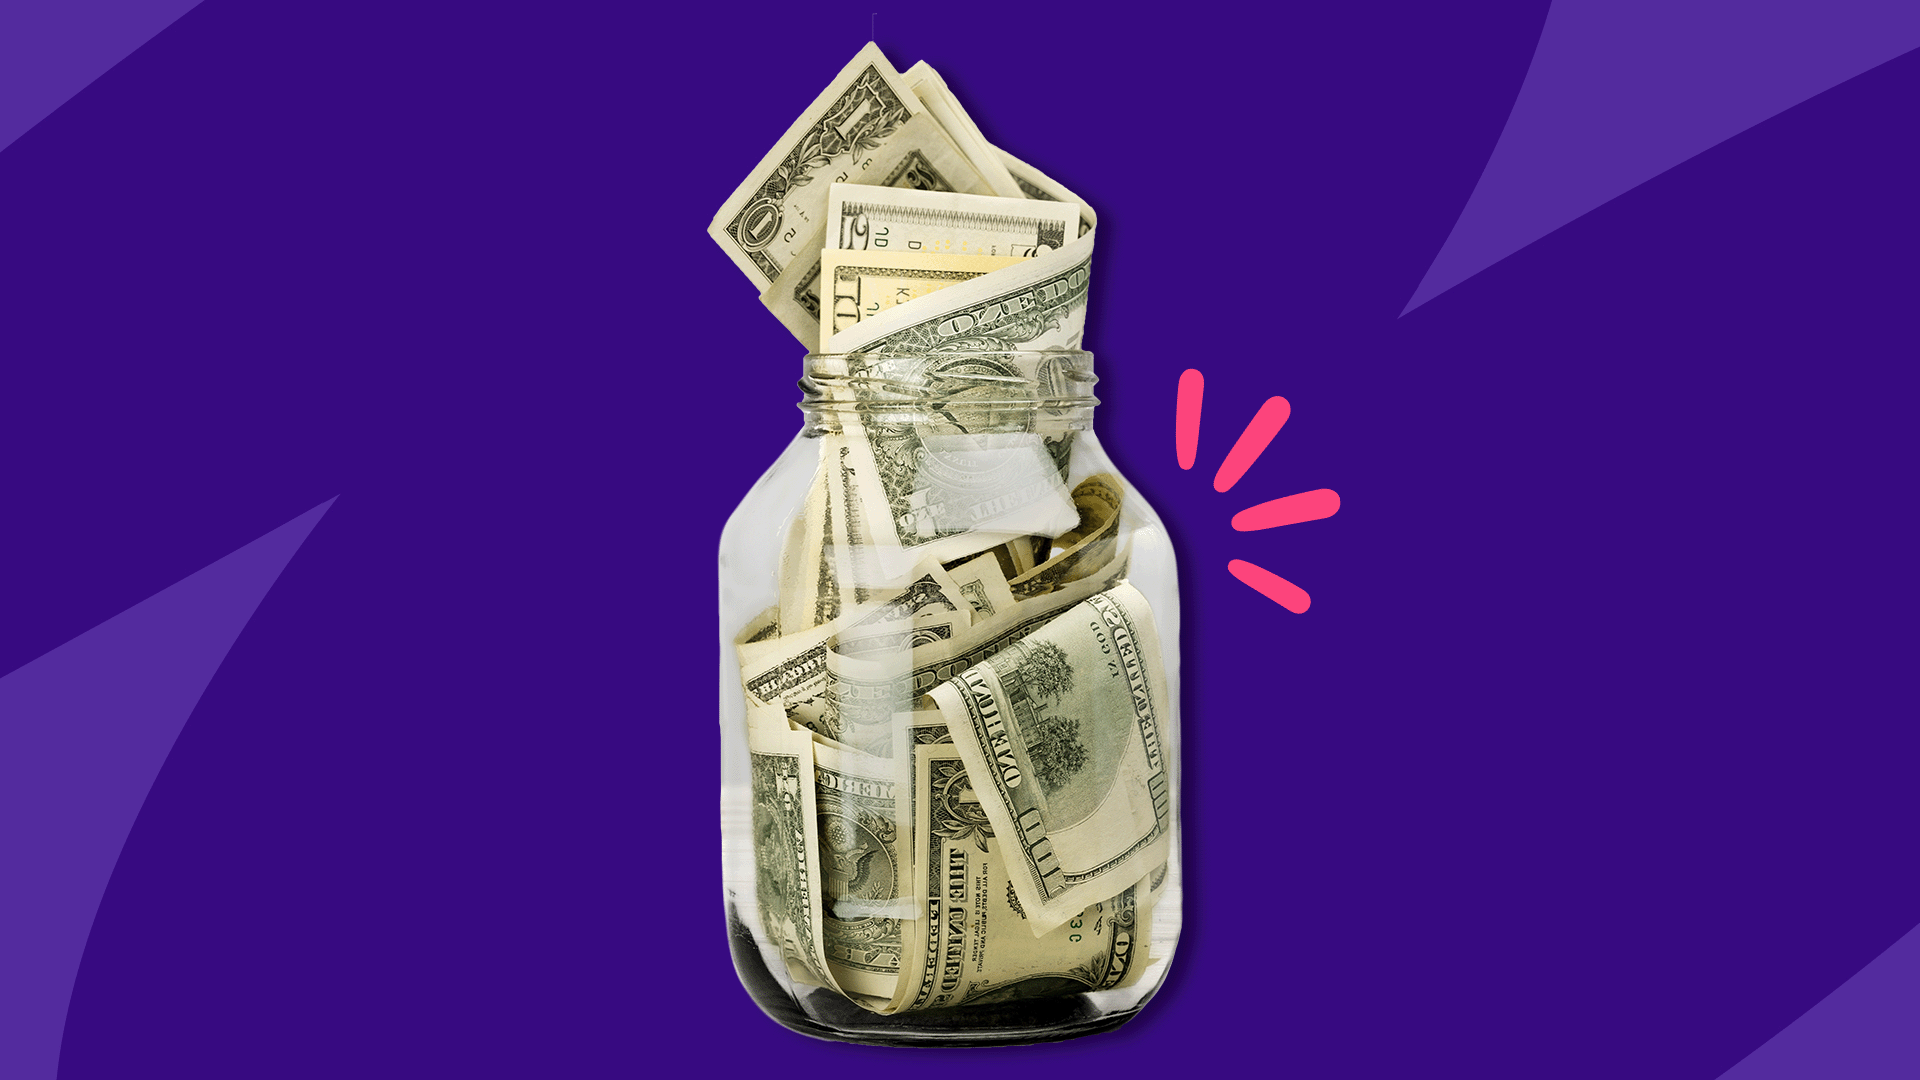 A jar of money represents SingleCare reviews